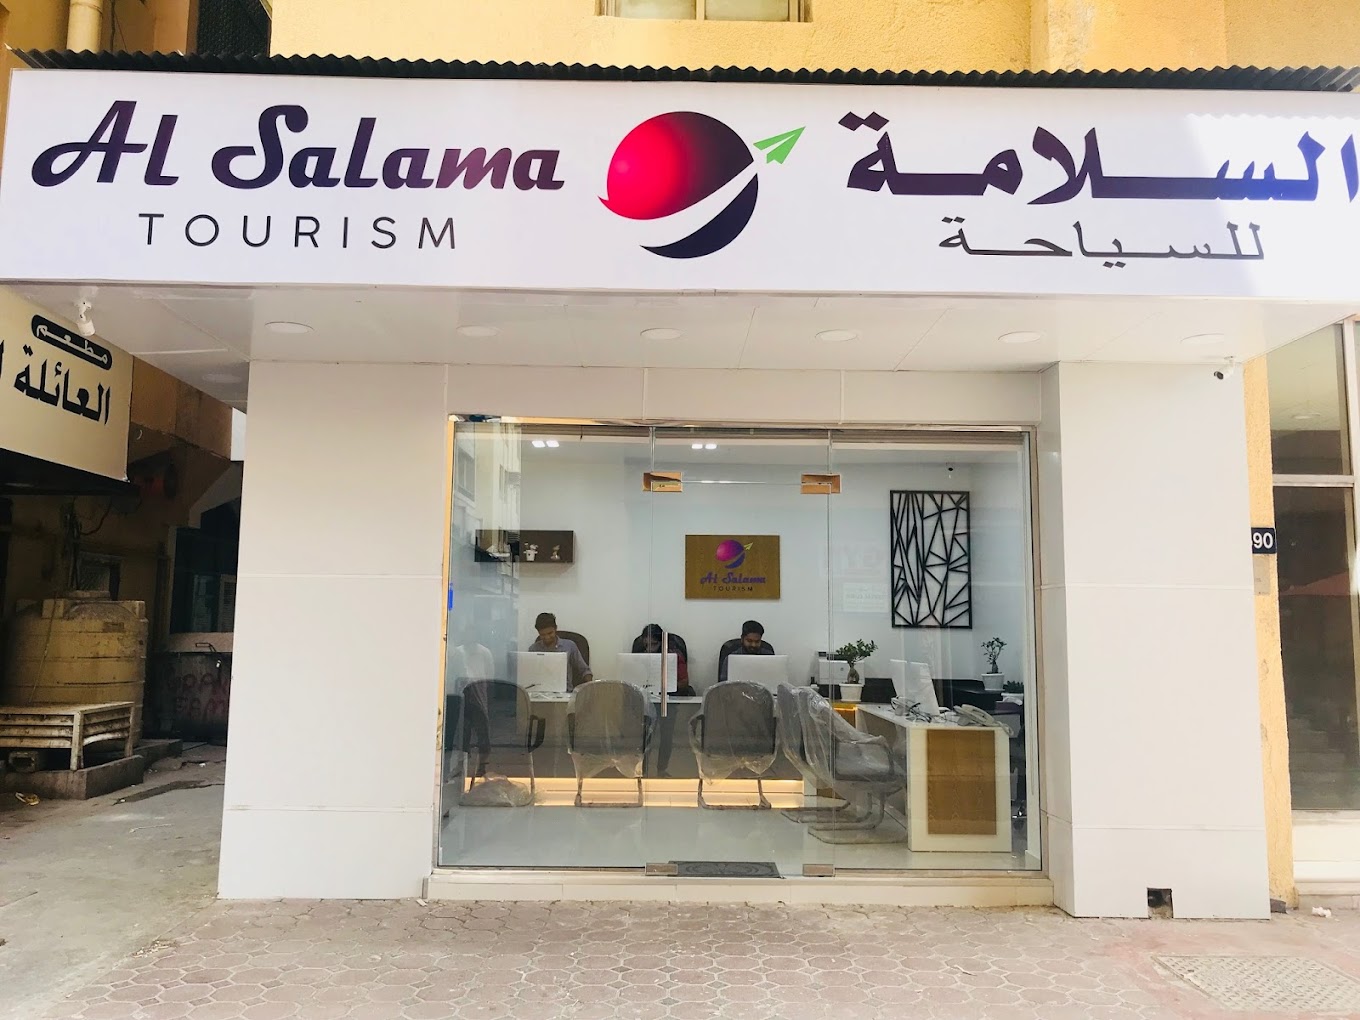 Al Salama Tourism images